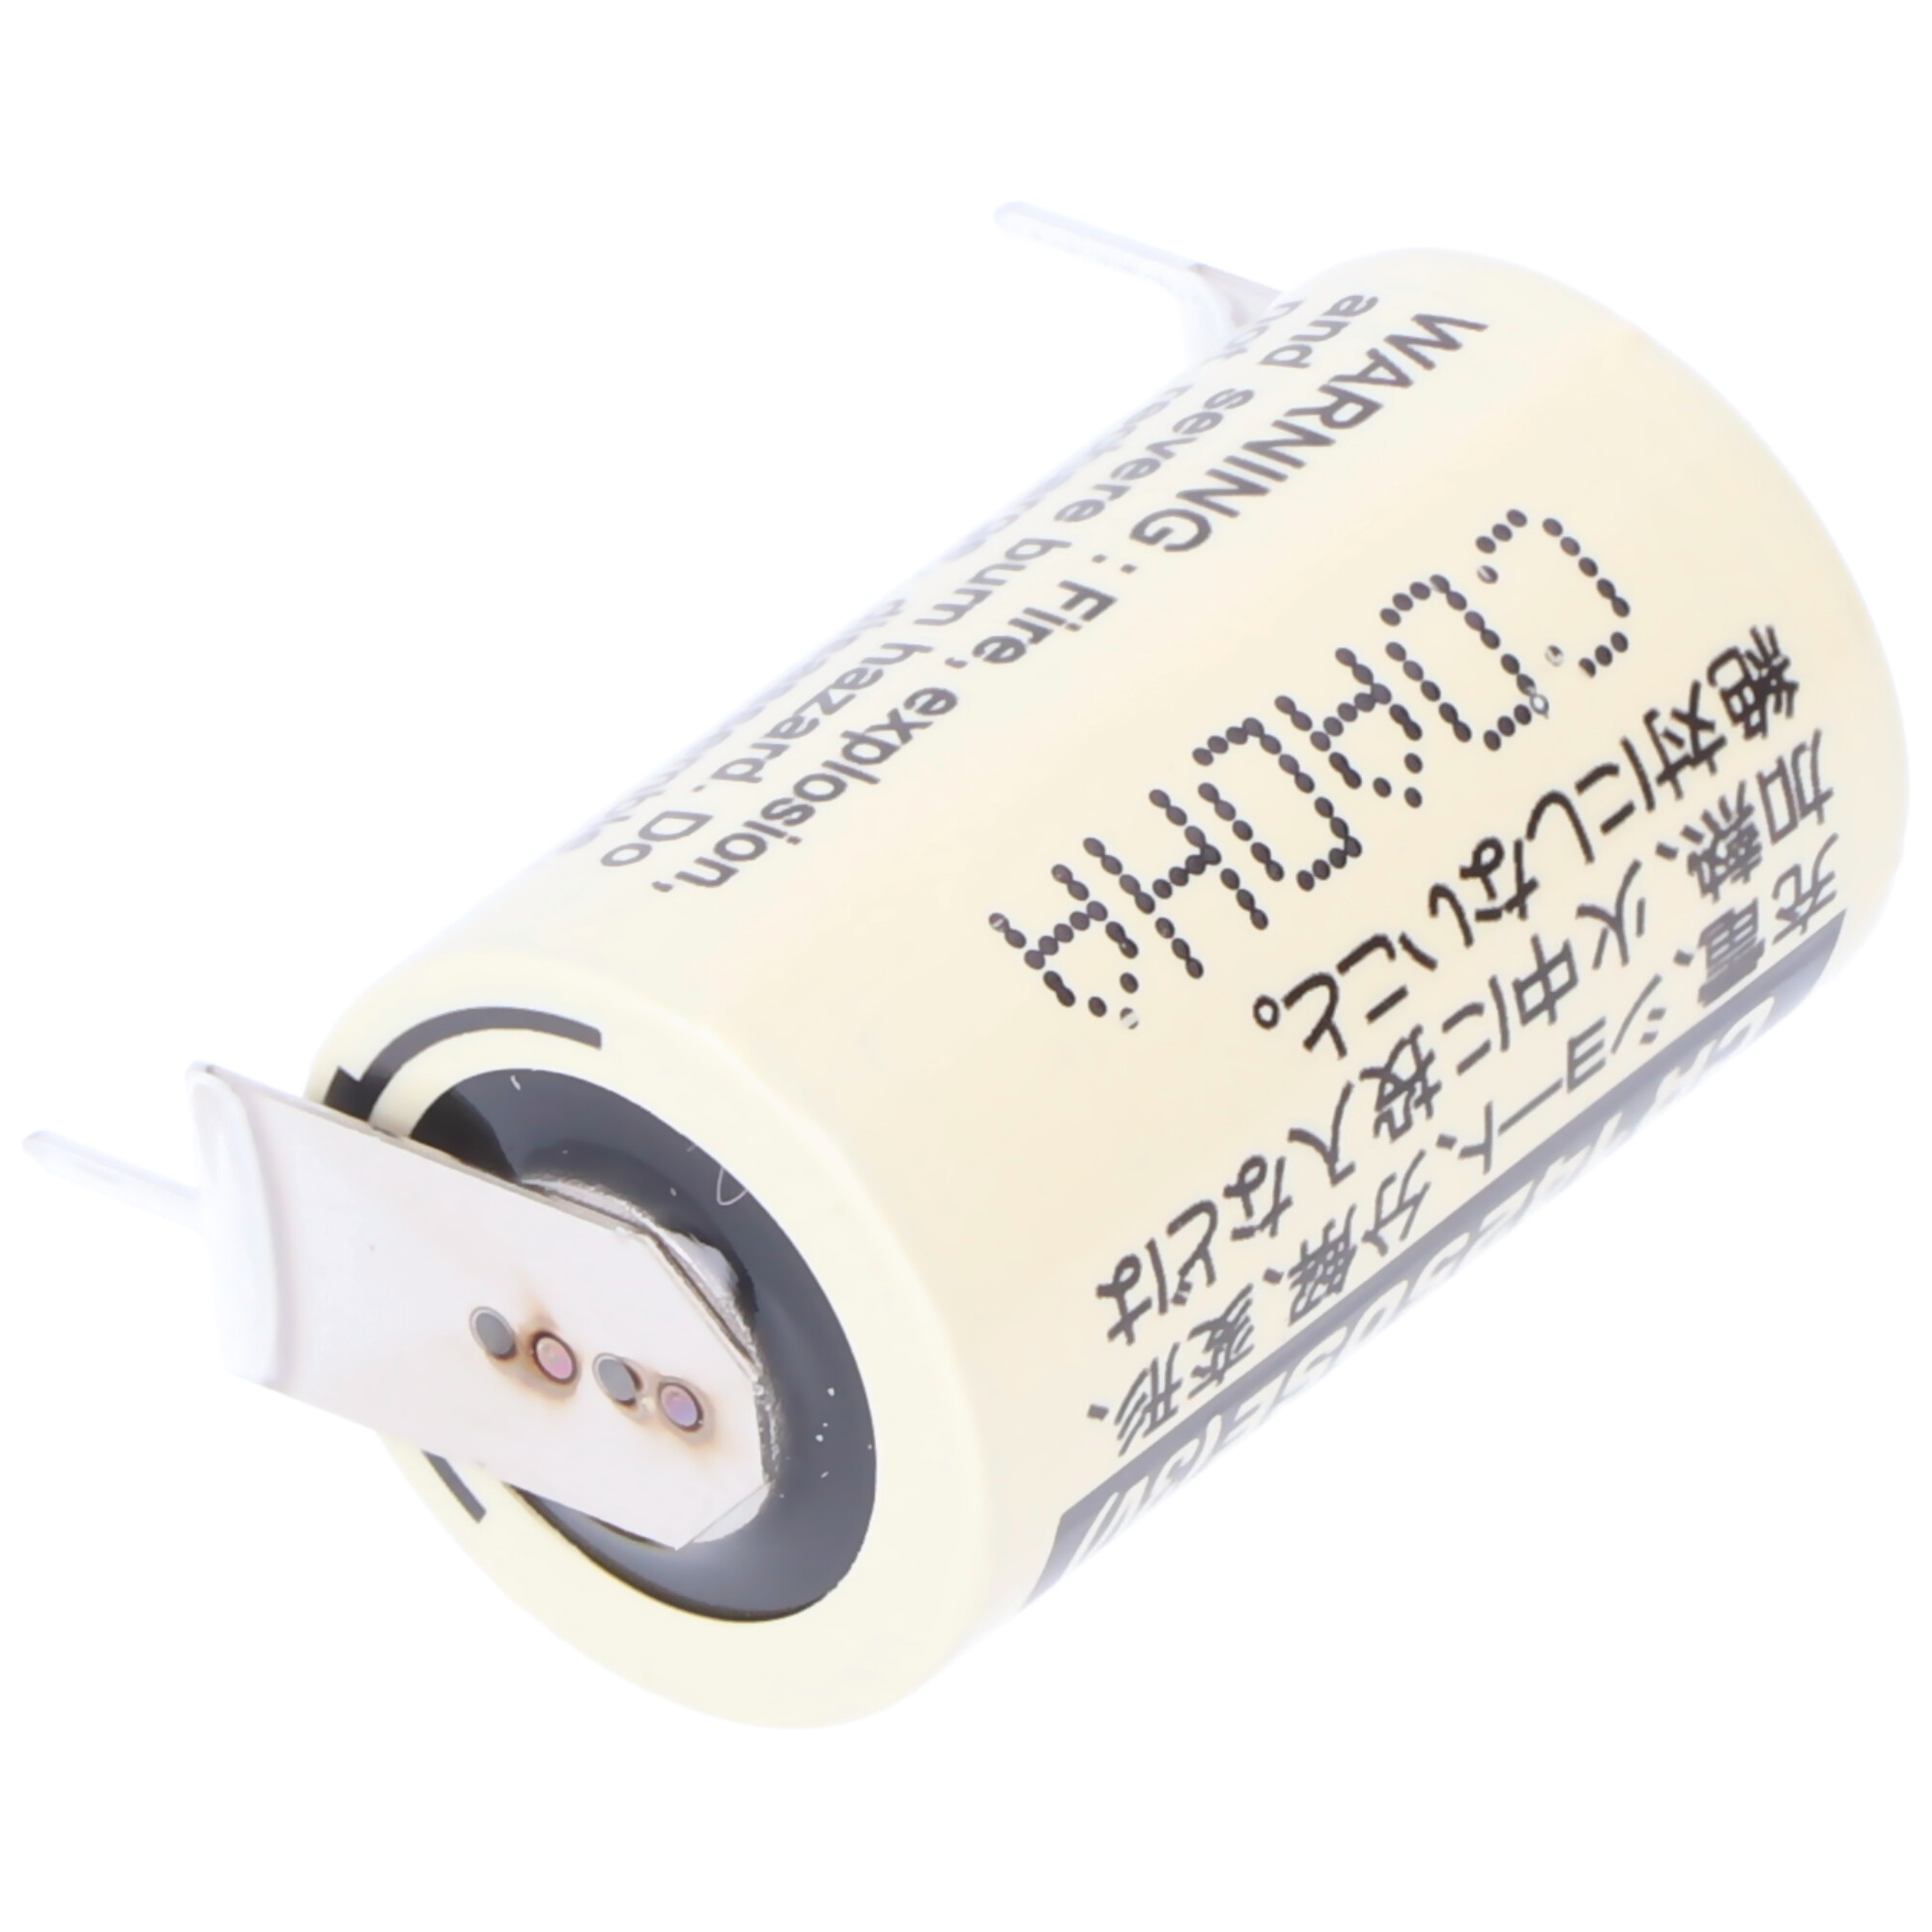 Sanyo Lithium Batterie CR14250 SE 1/2AA, IEC CR14250, 3er Print, Rastermaß ca. 10mm